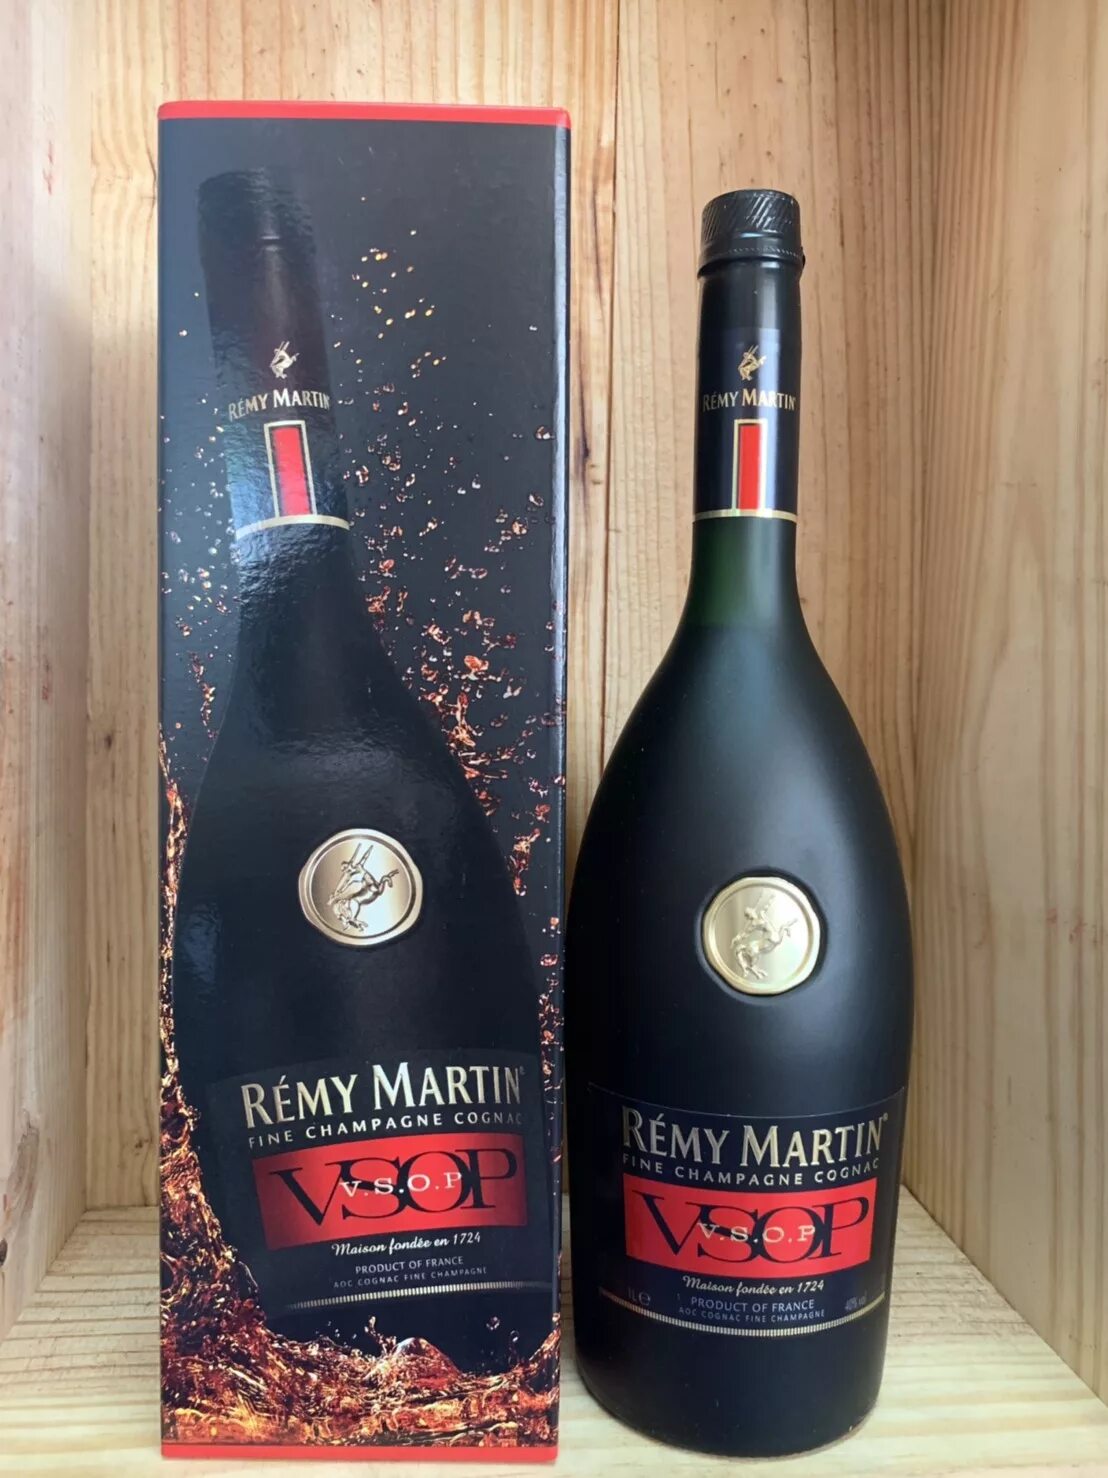 Remy martin 0.5